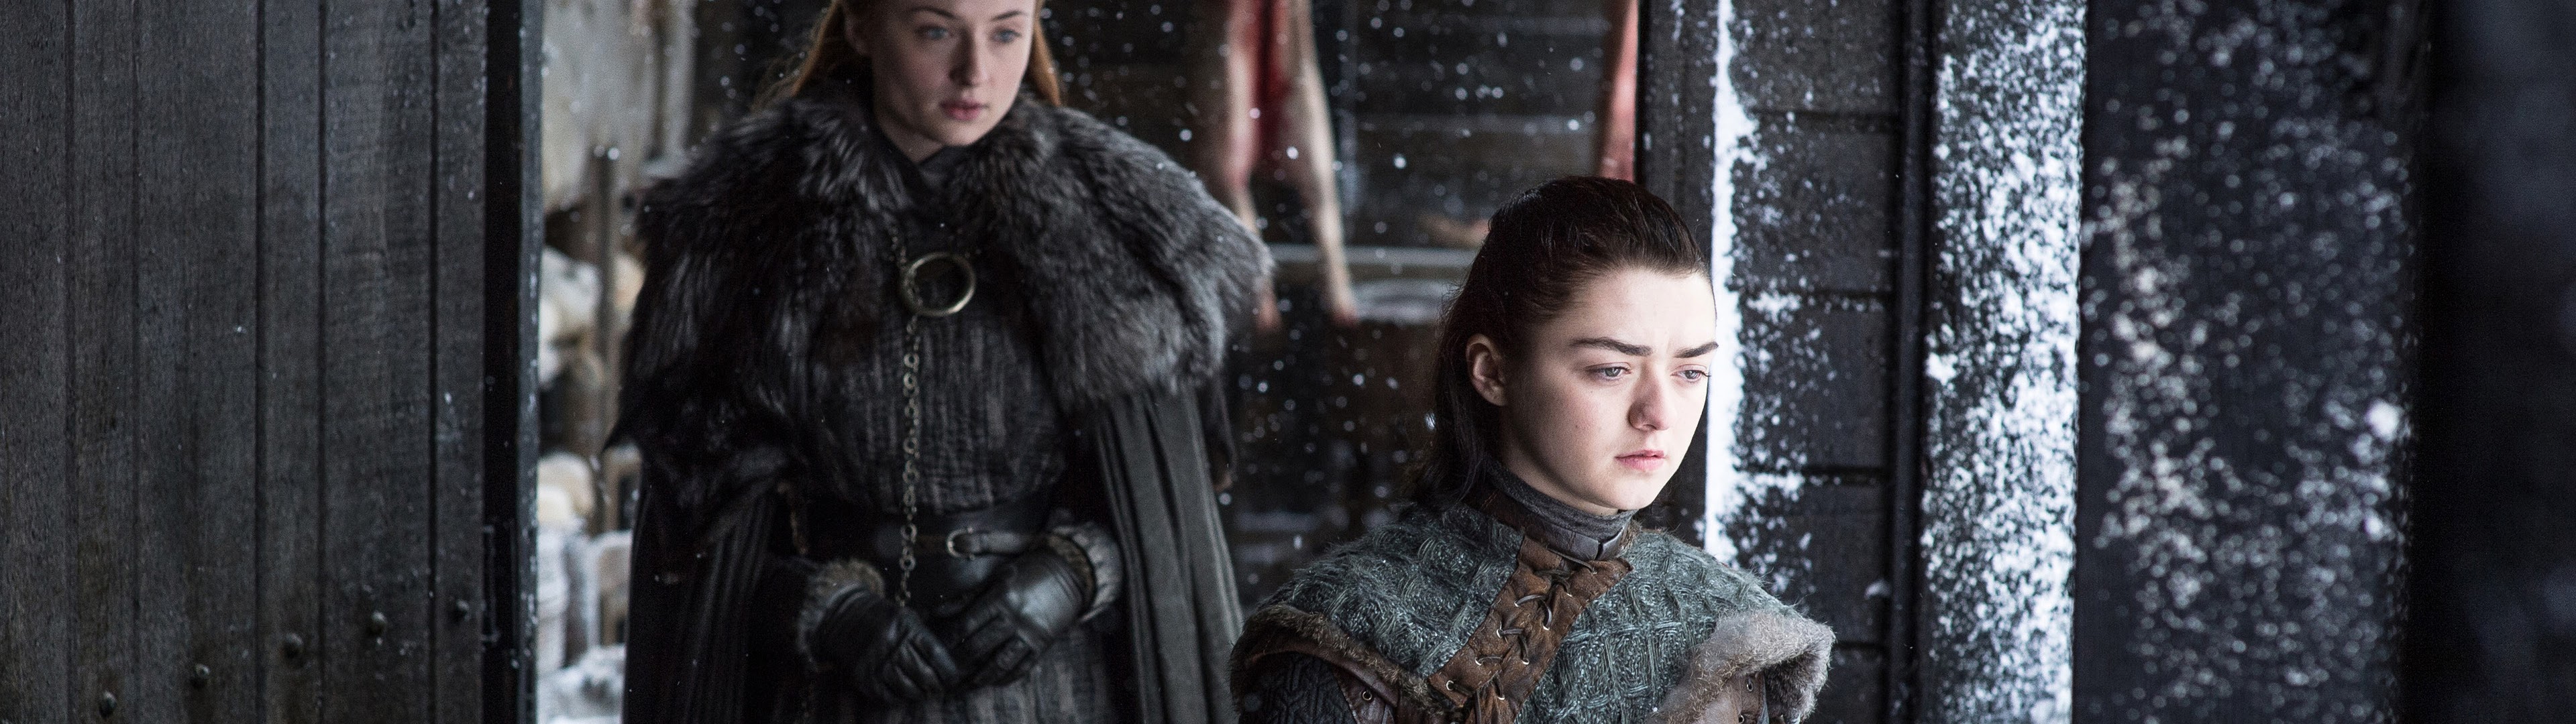 Sansa And Arya Stark Game Of Thrones Season 7 Wallpapers